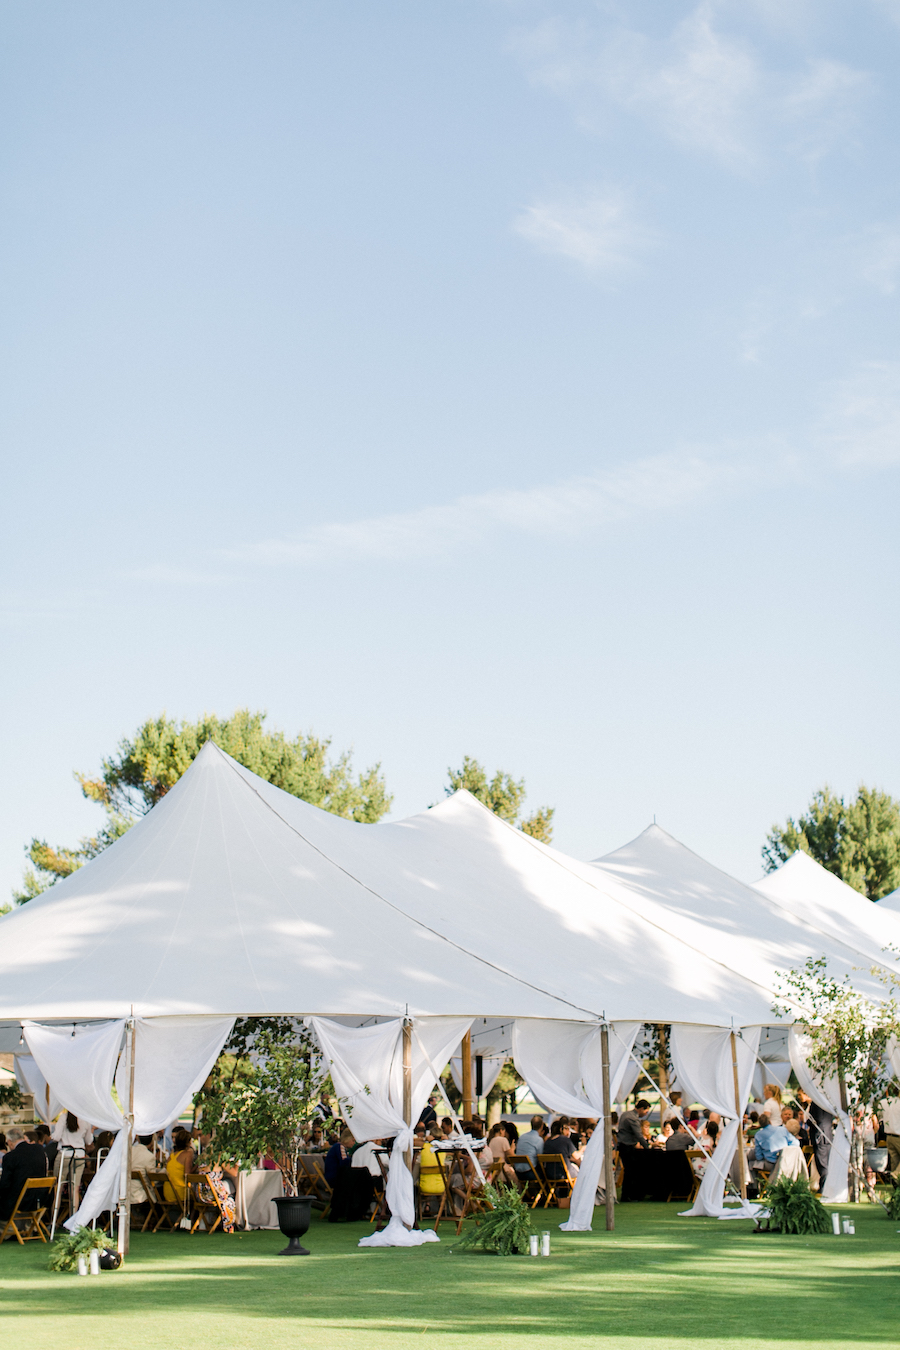 A lakeside wedding tent